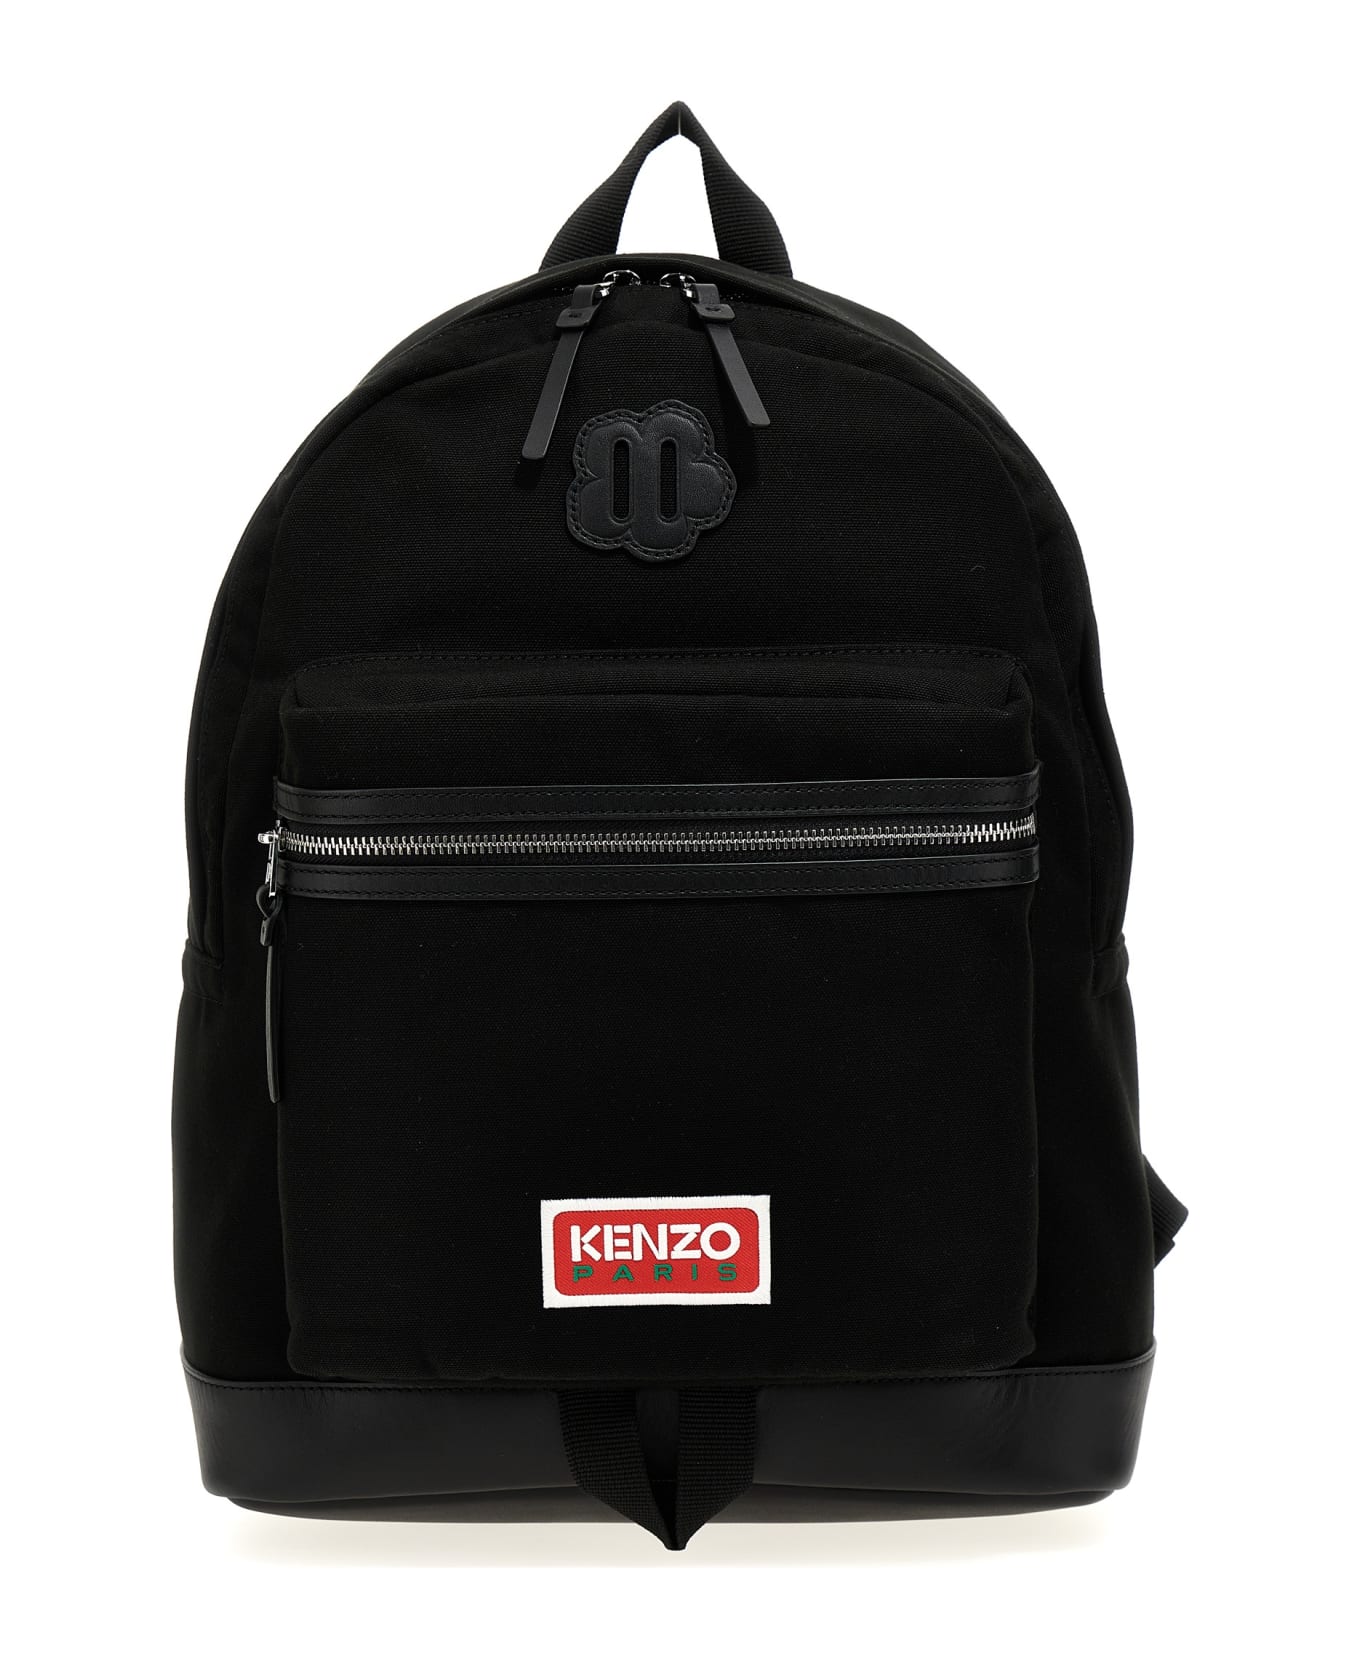 Kenzo Explore Backpack - BLACK